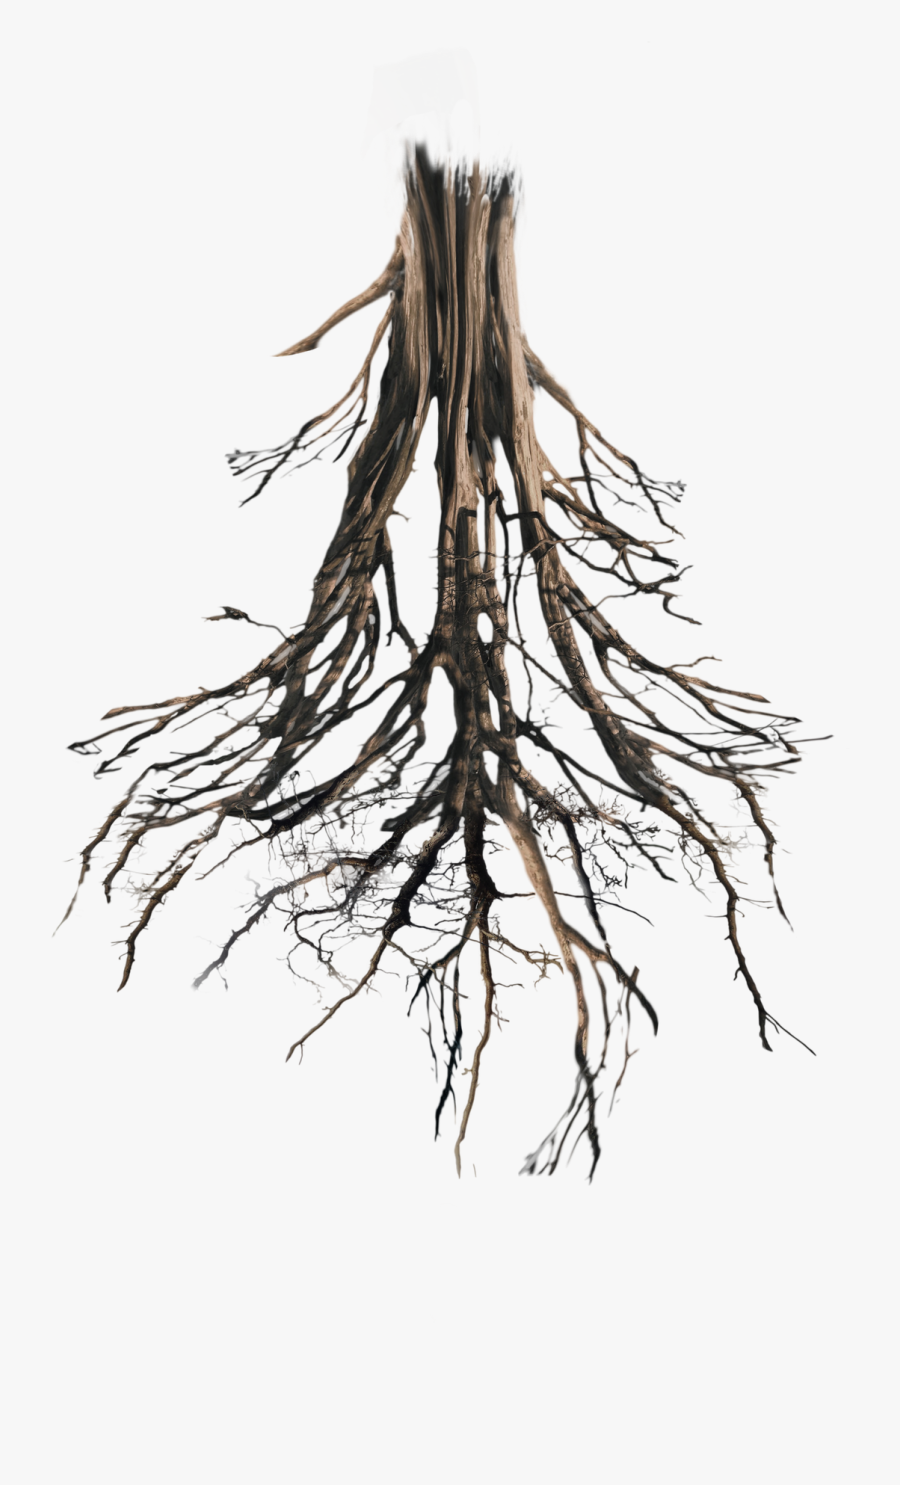 Roots Png, Transparent Clipart